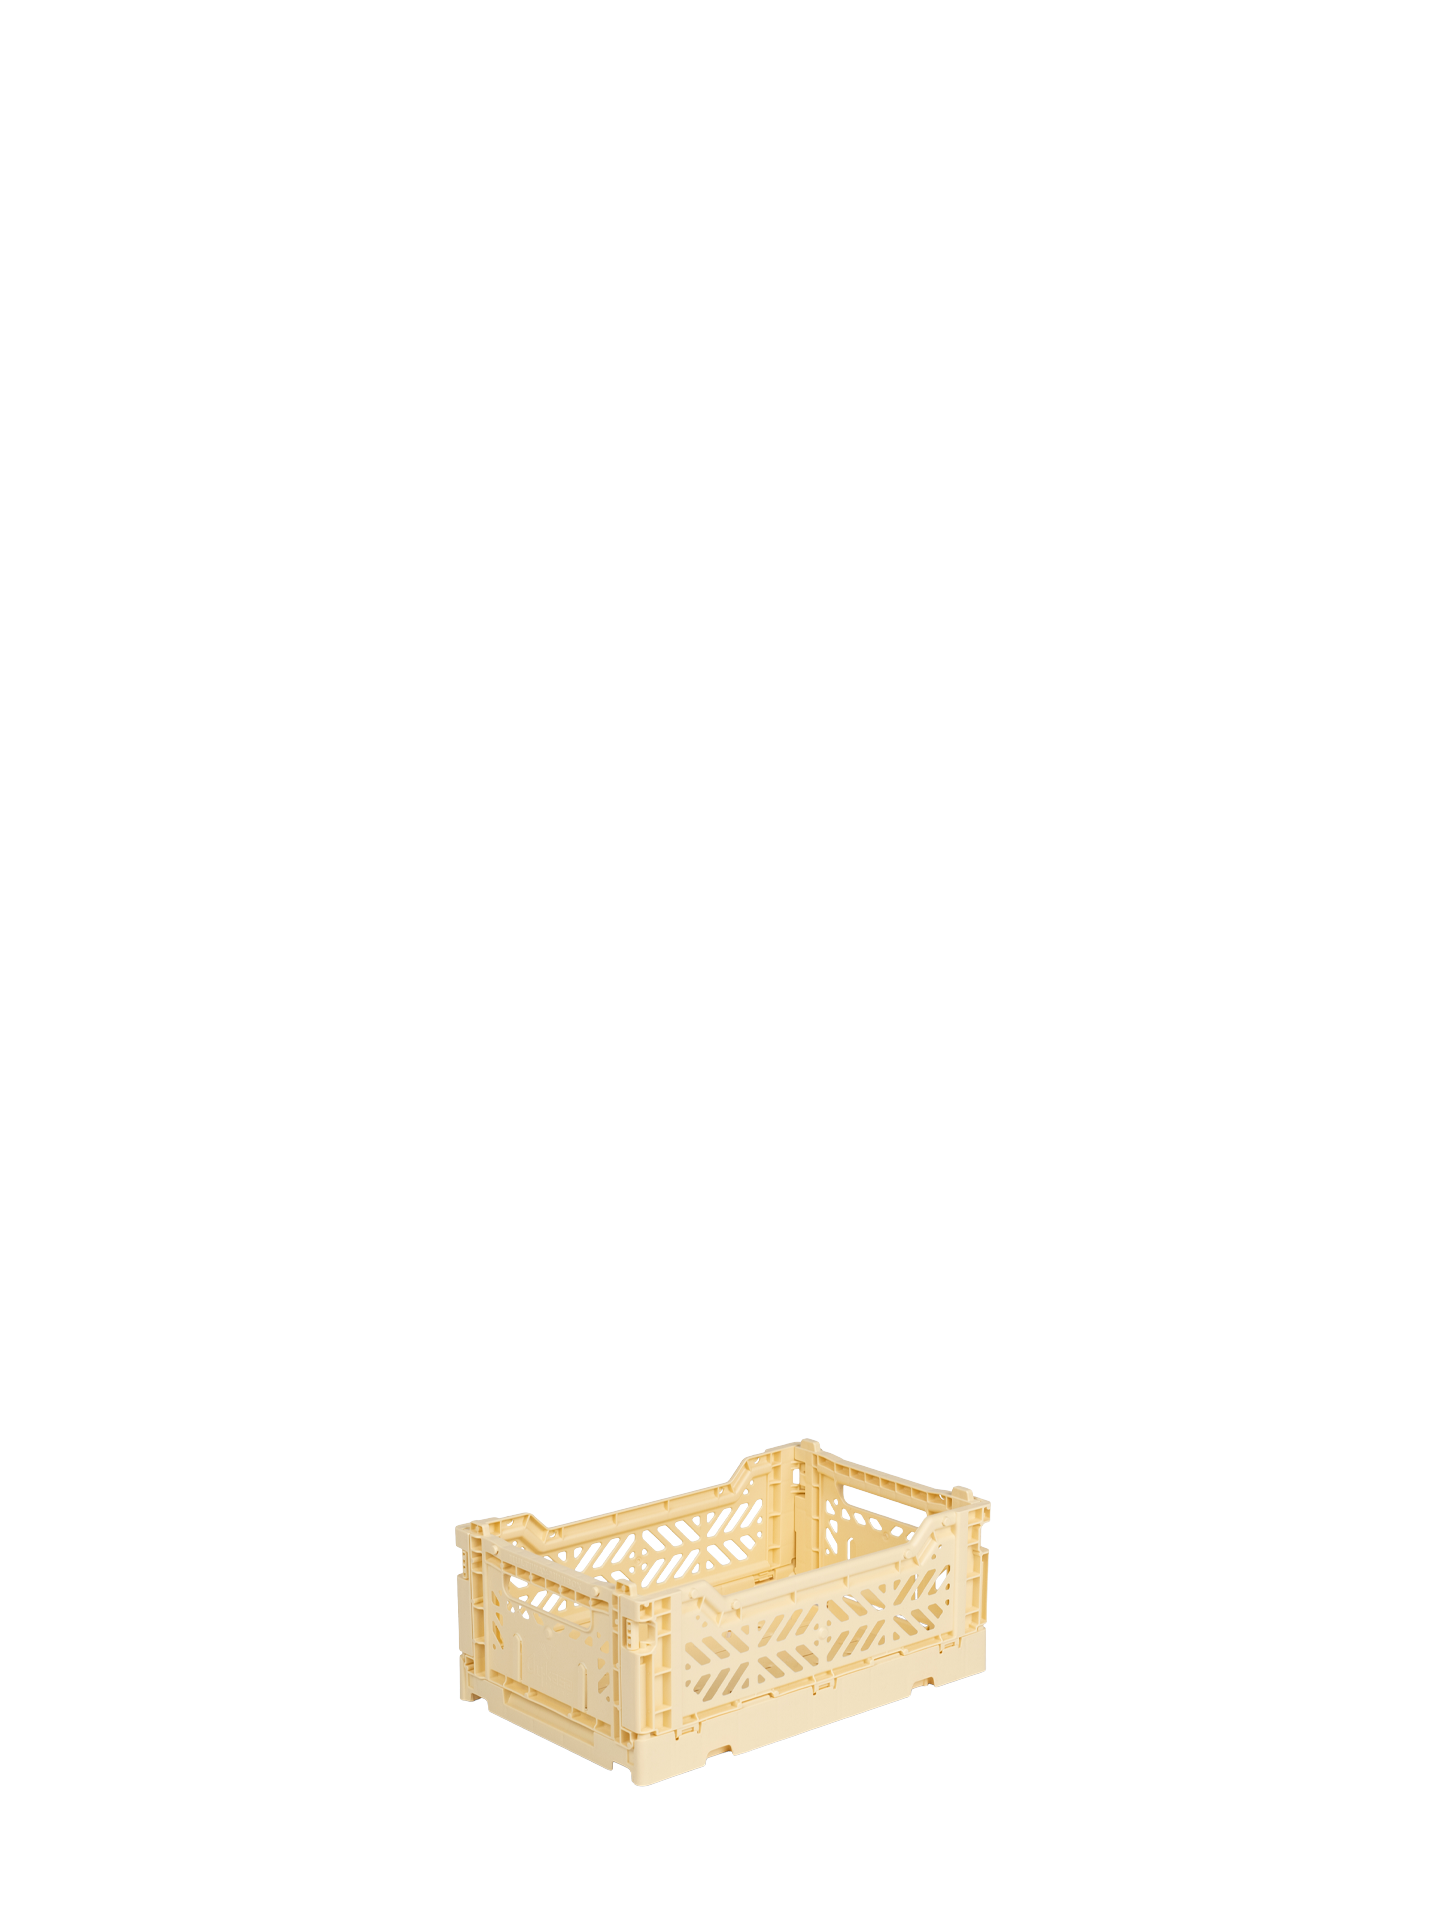 Mini Aykasa crate in pastel pale banana yellow stacks and folds